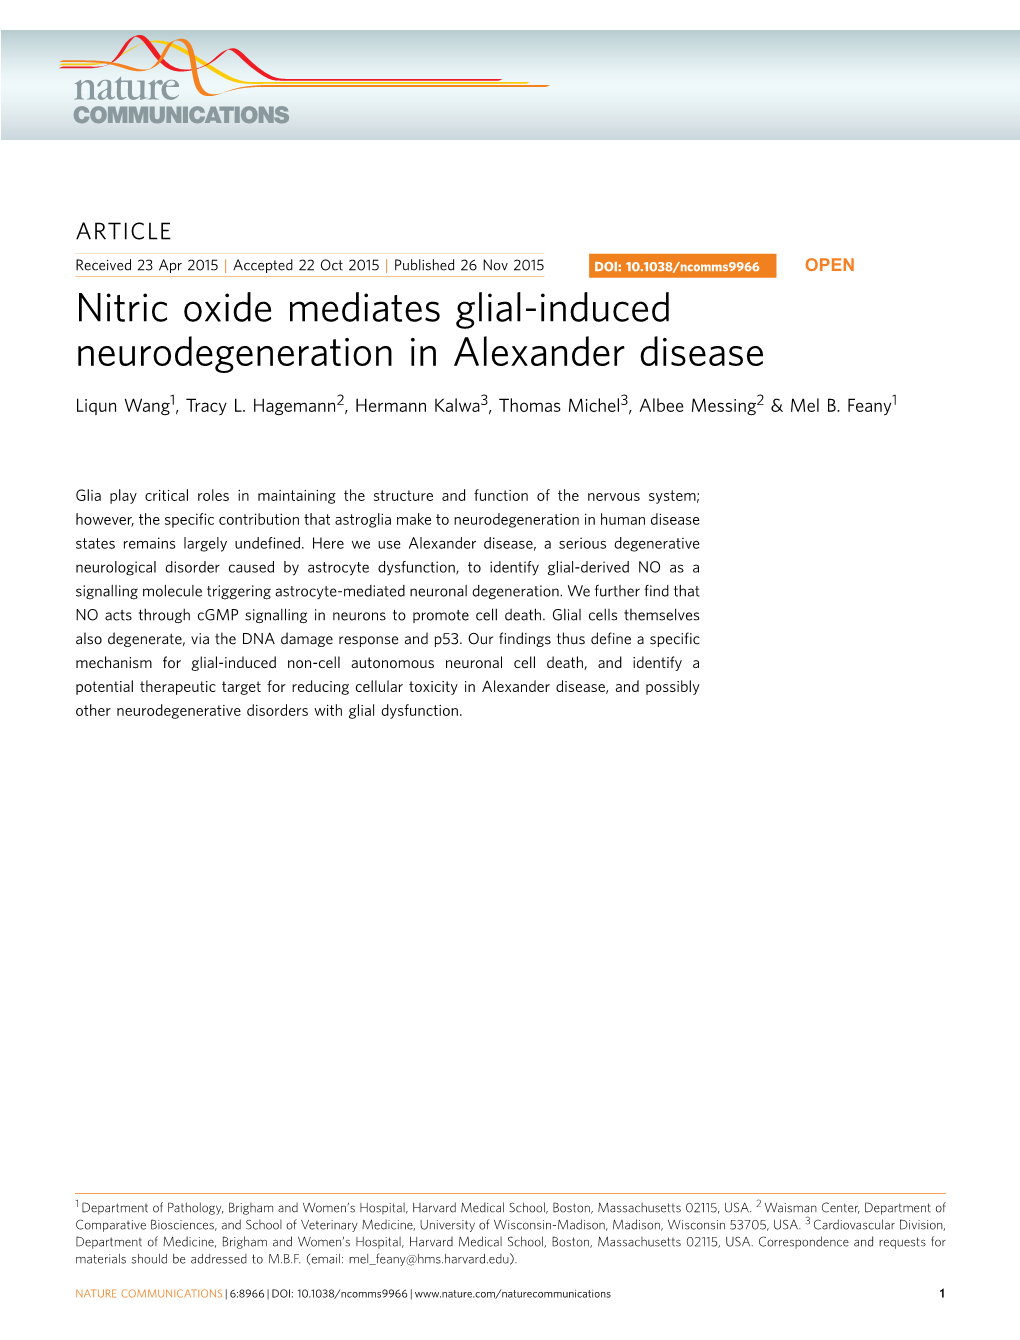 Nitric Oxide Mediates Glial-Induced Neurodegeneration in Alexander Disease